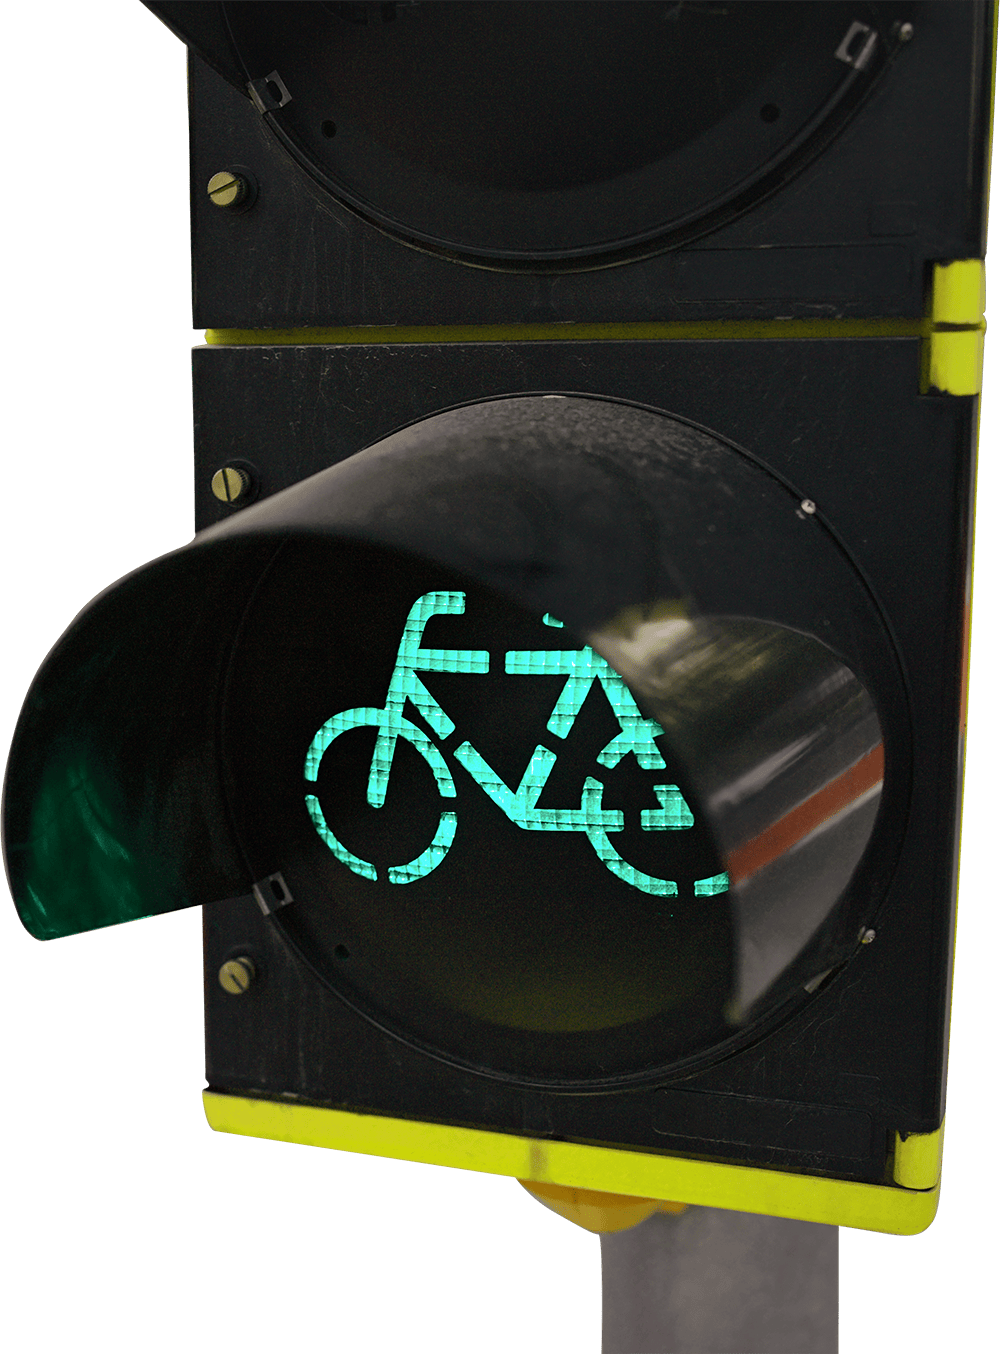 Bike traffic light